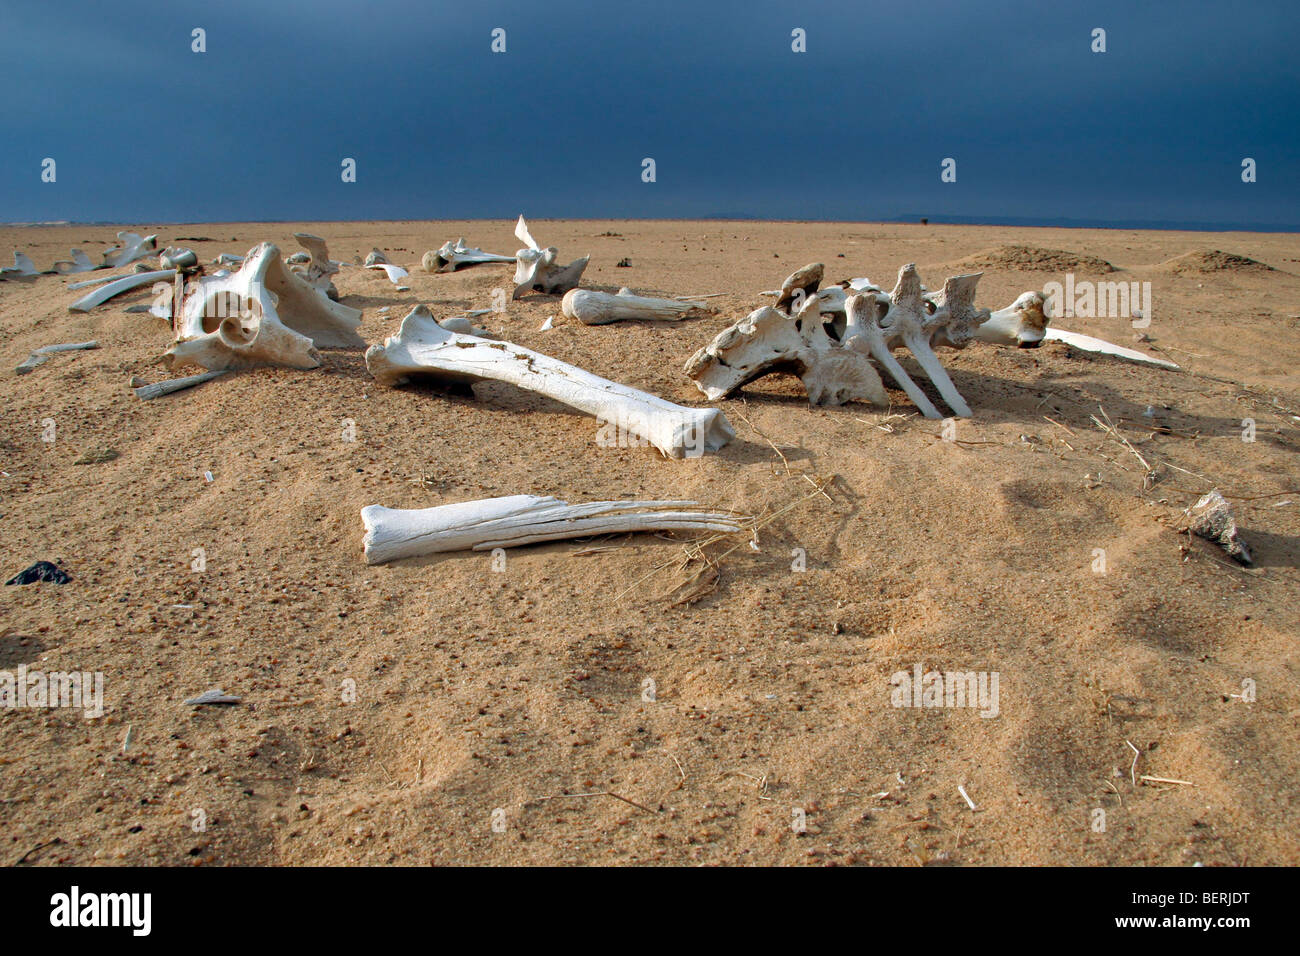 Cammello Dromedario (Camelus dromedarius) skeleton e sbiancato ossa nel deserto del Sahara, Niger, Africa occidentale Foto Stock